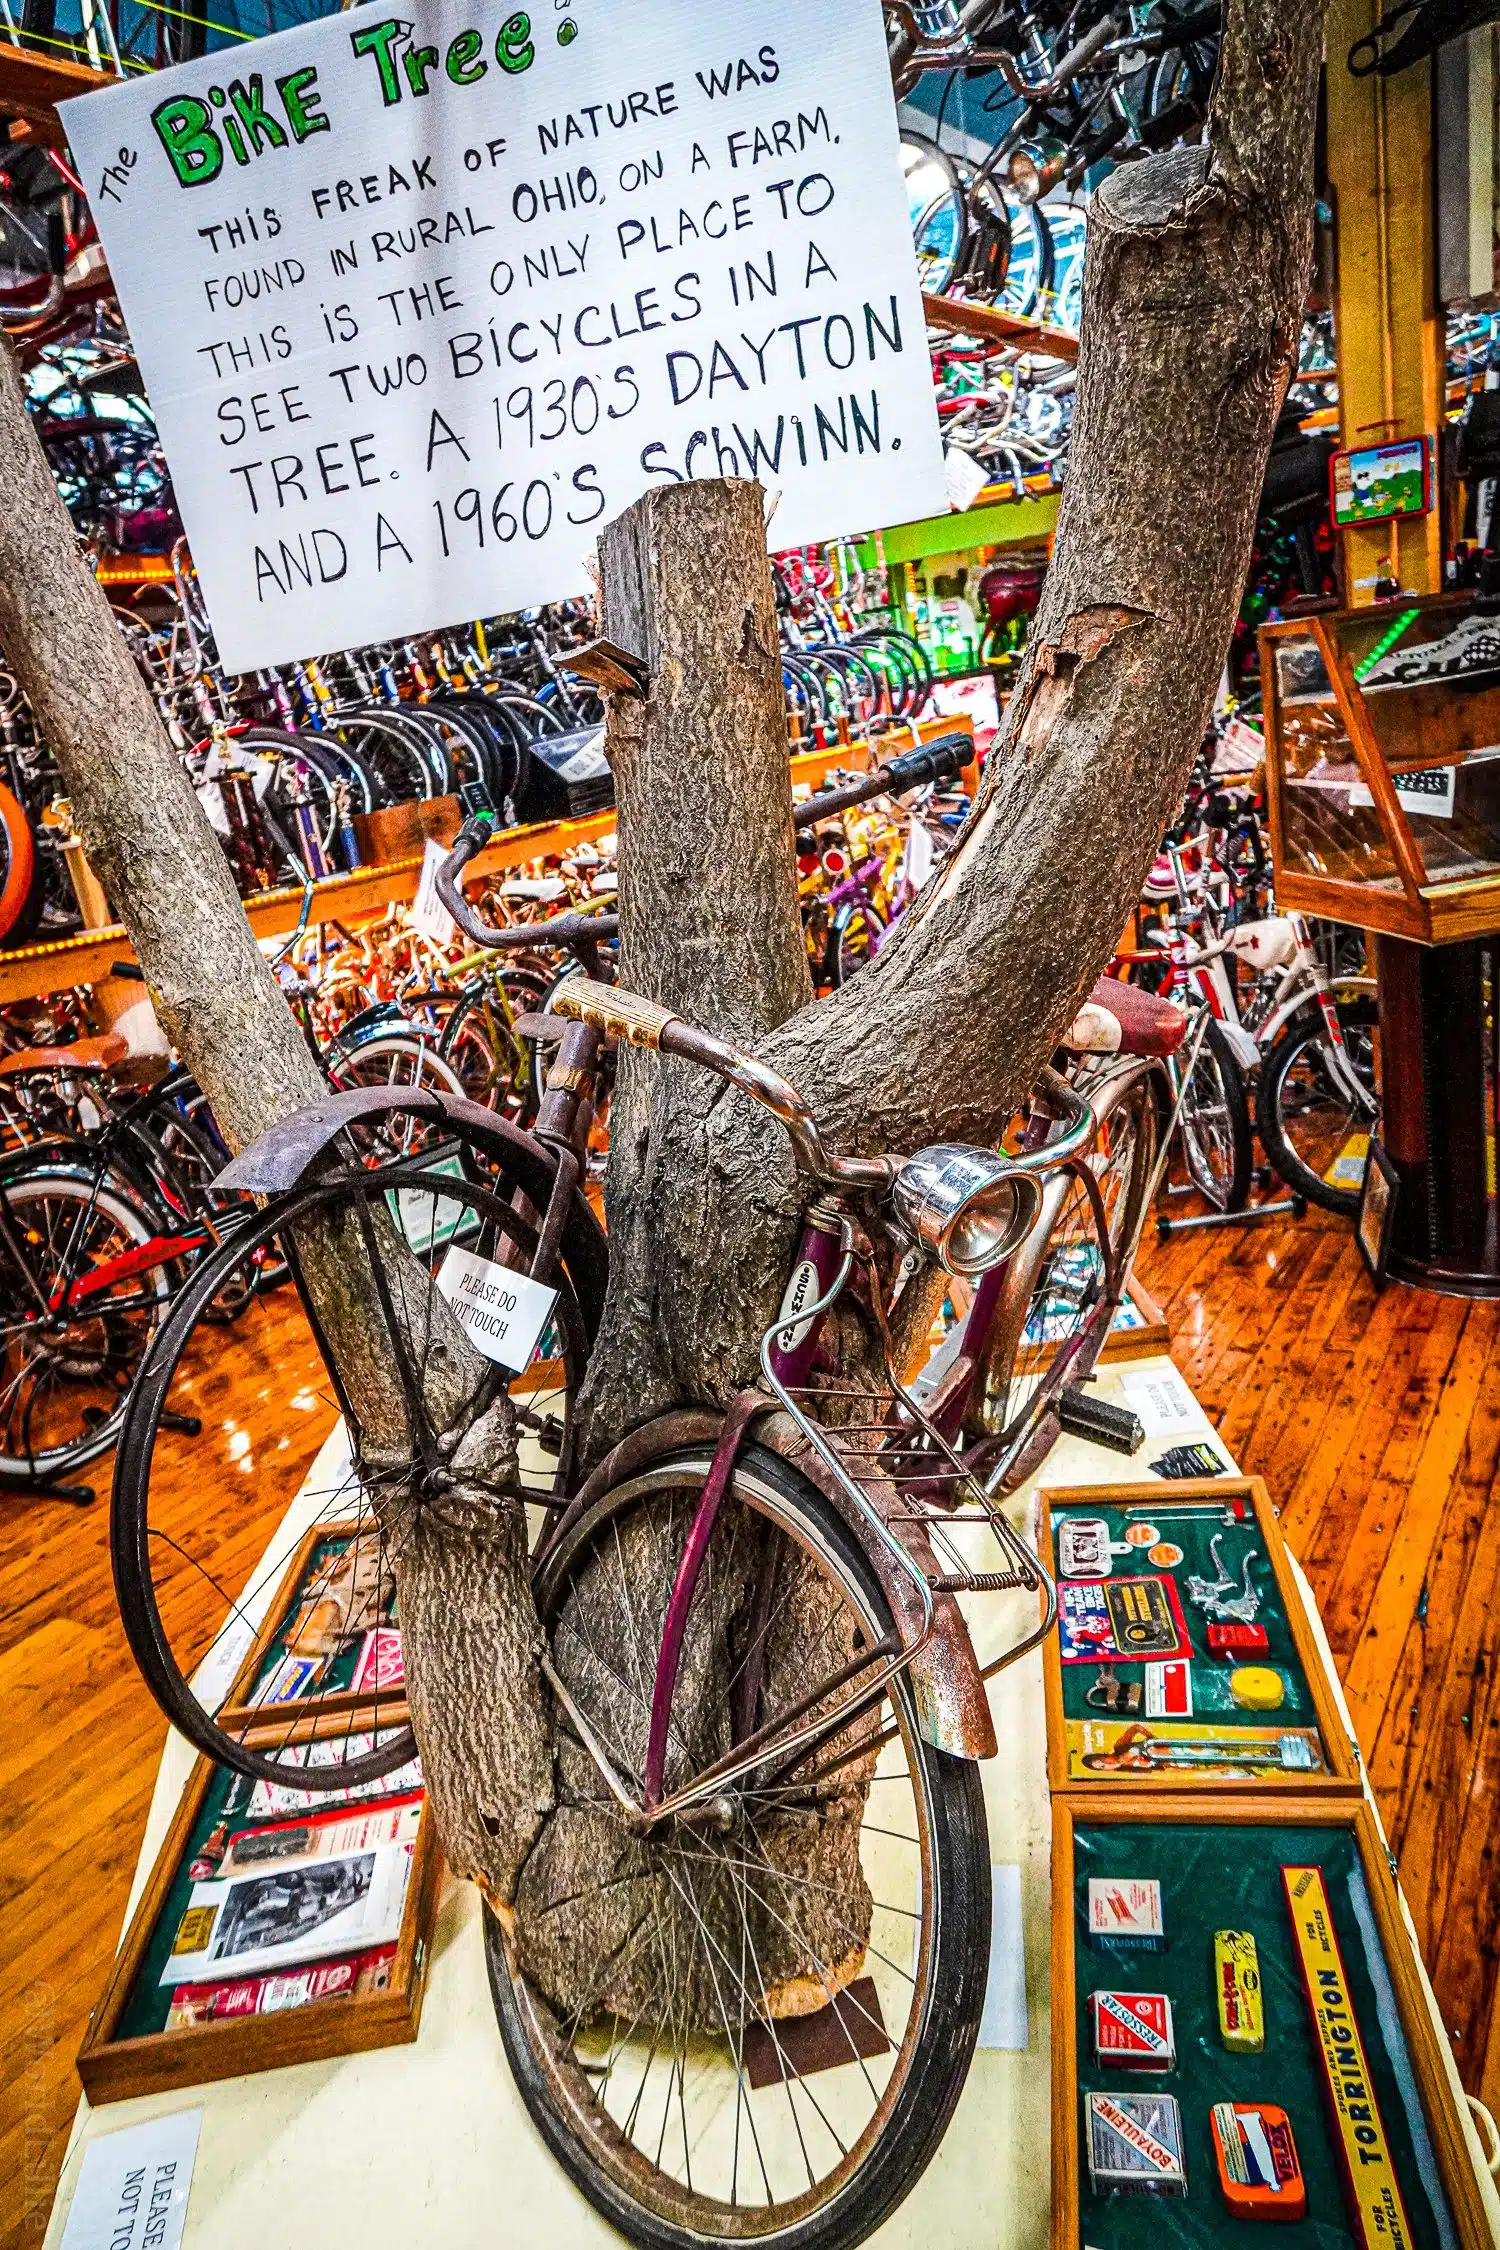 The tree that ate two vintage bikes!